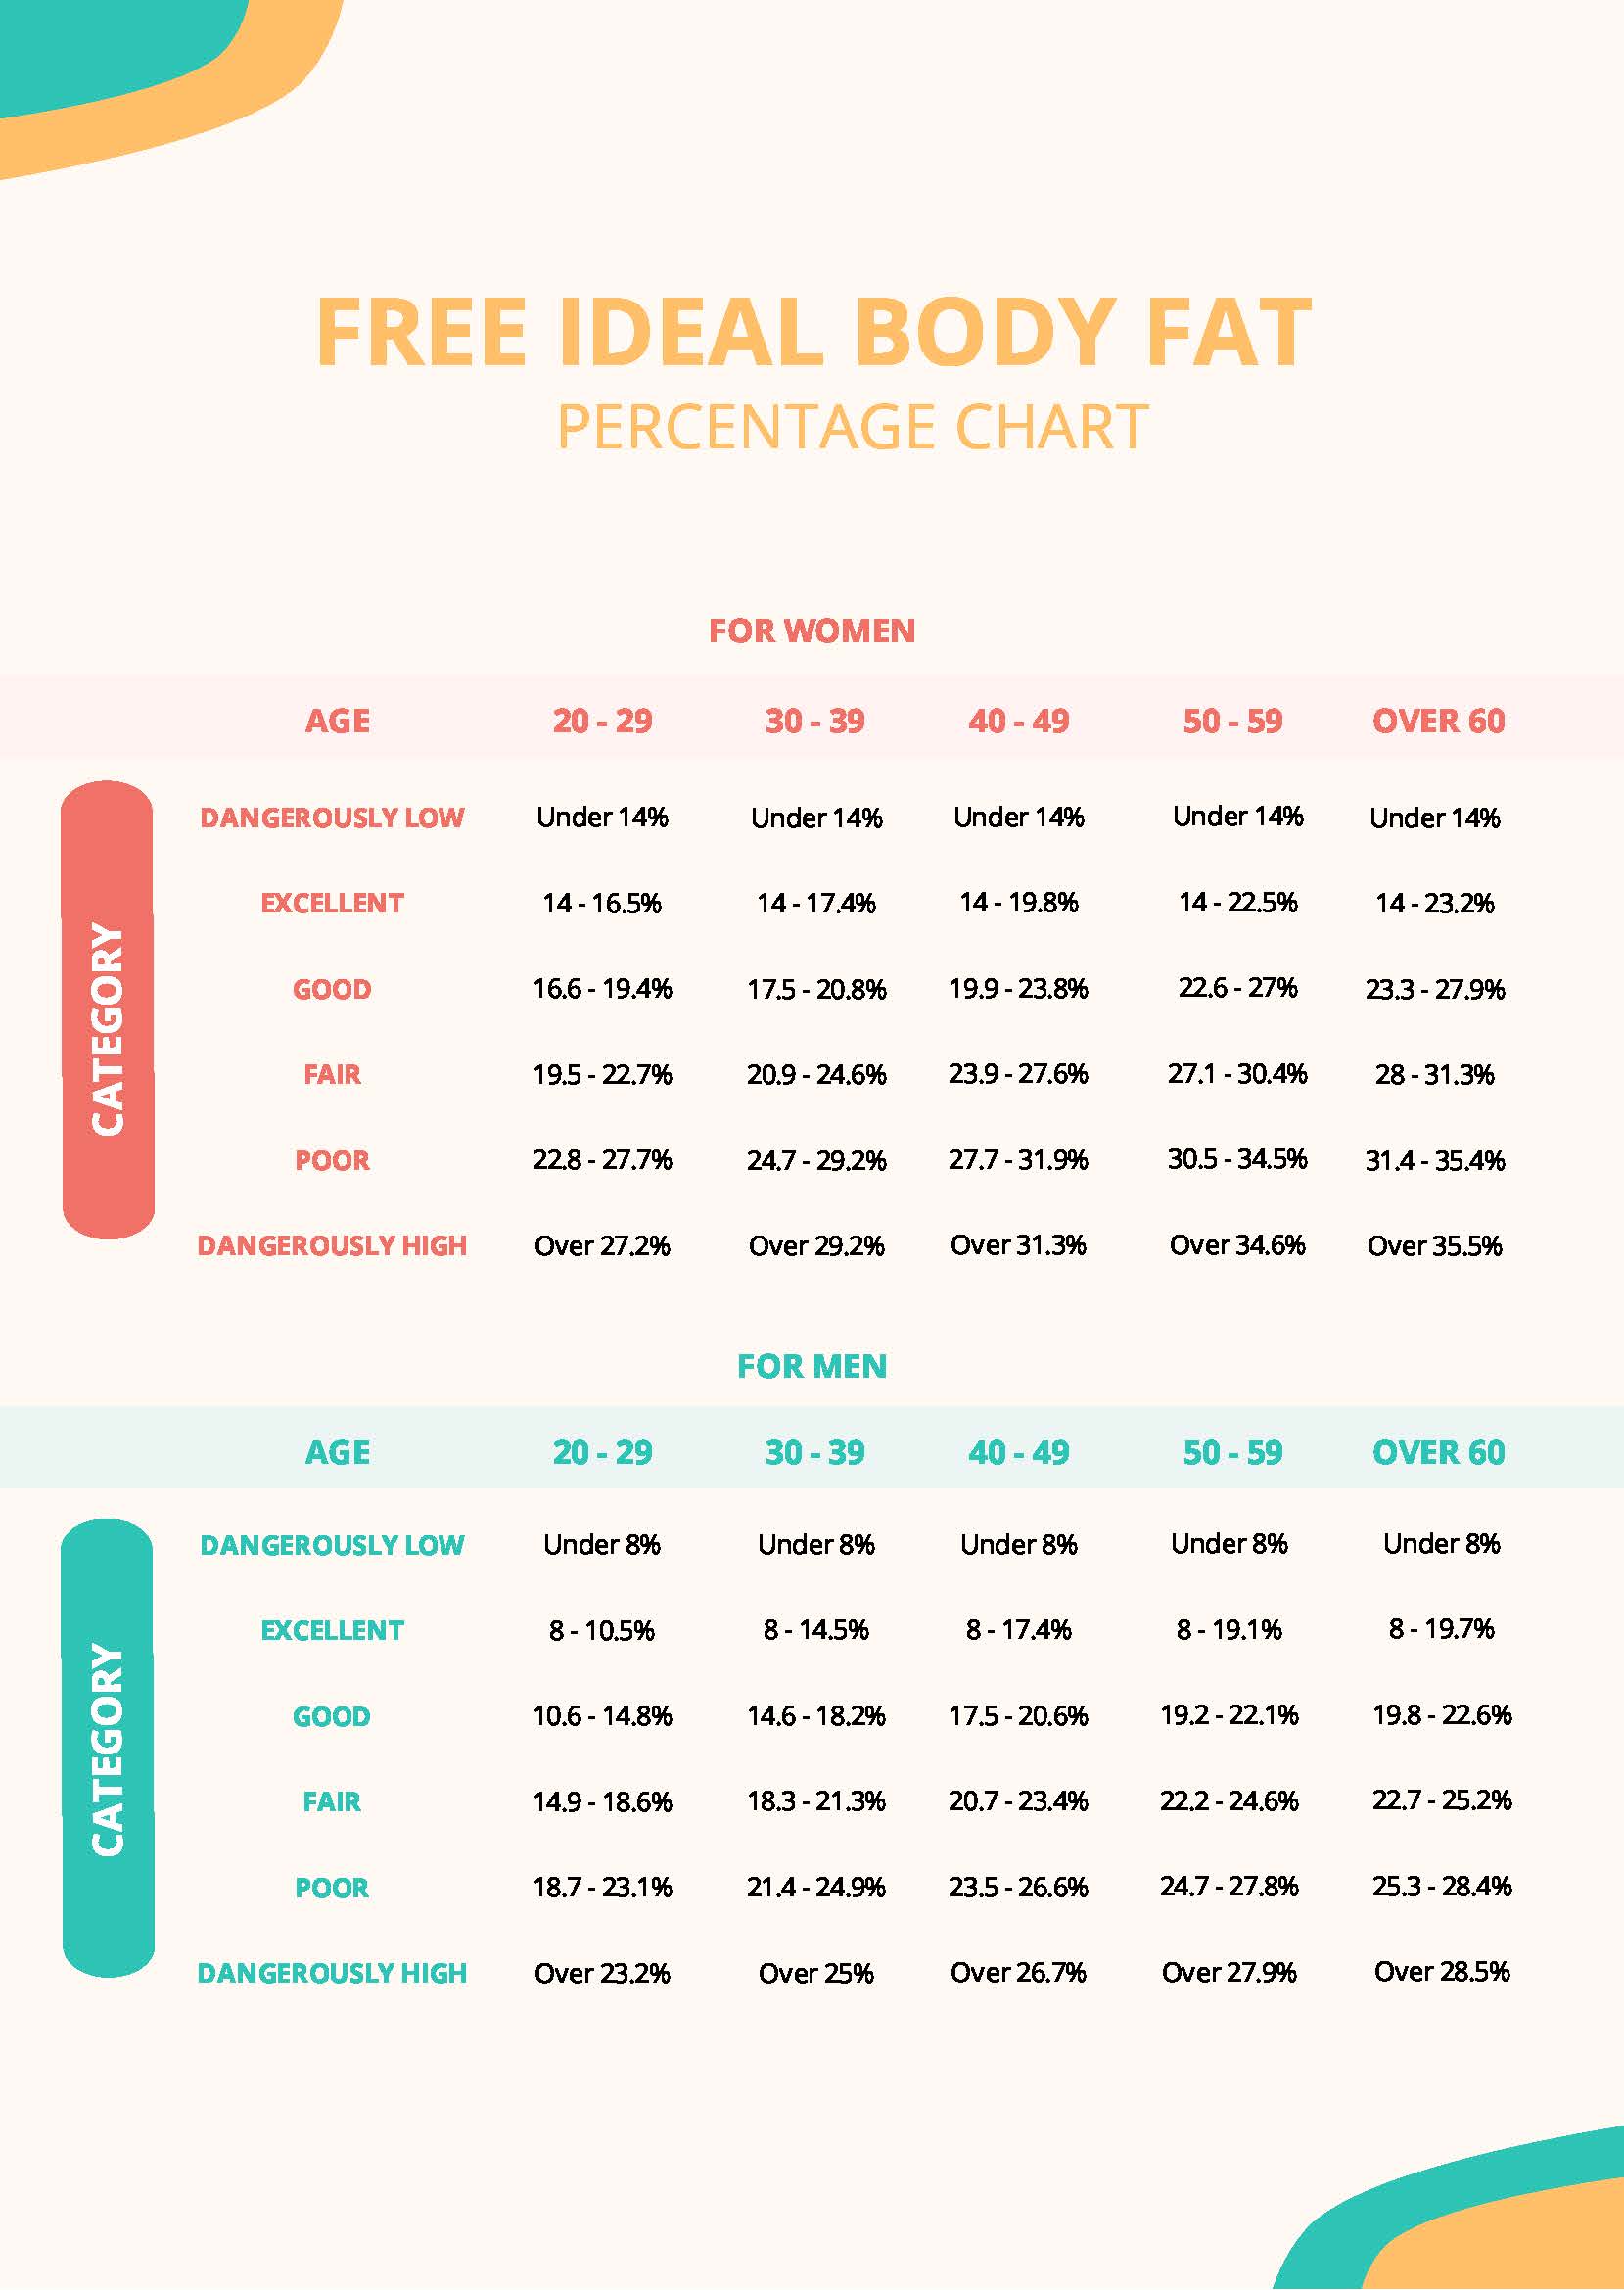 Free Ideal Body Fat Percentage Chart in PDF